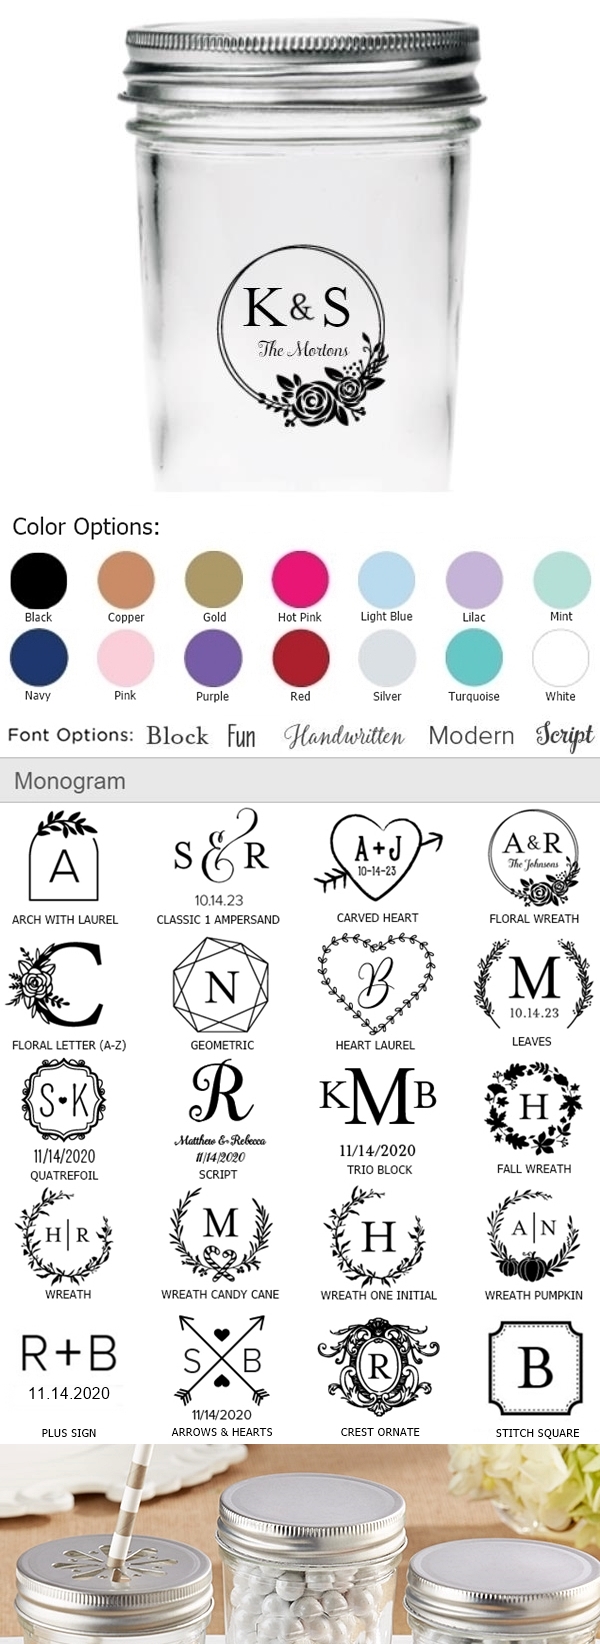 Kate Aspen Personalized Mason Jars with Monogram Designs (Set of 12)